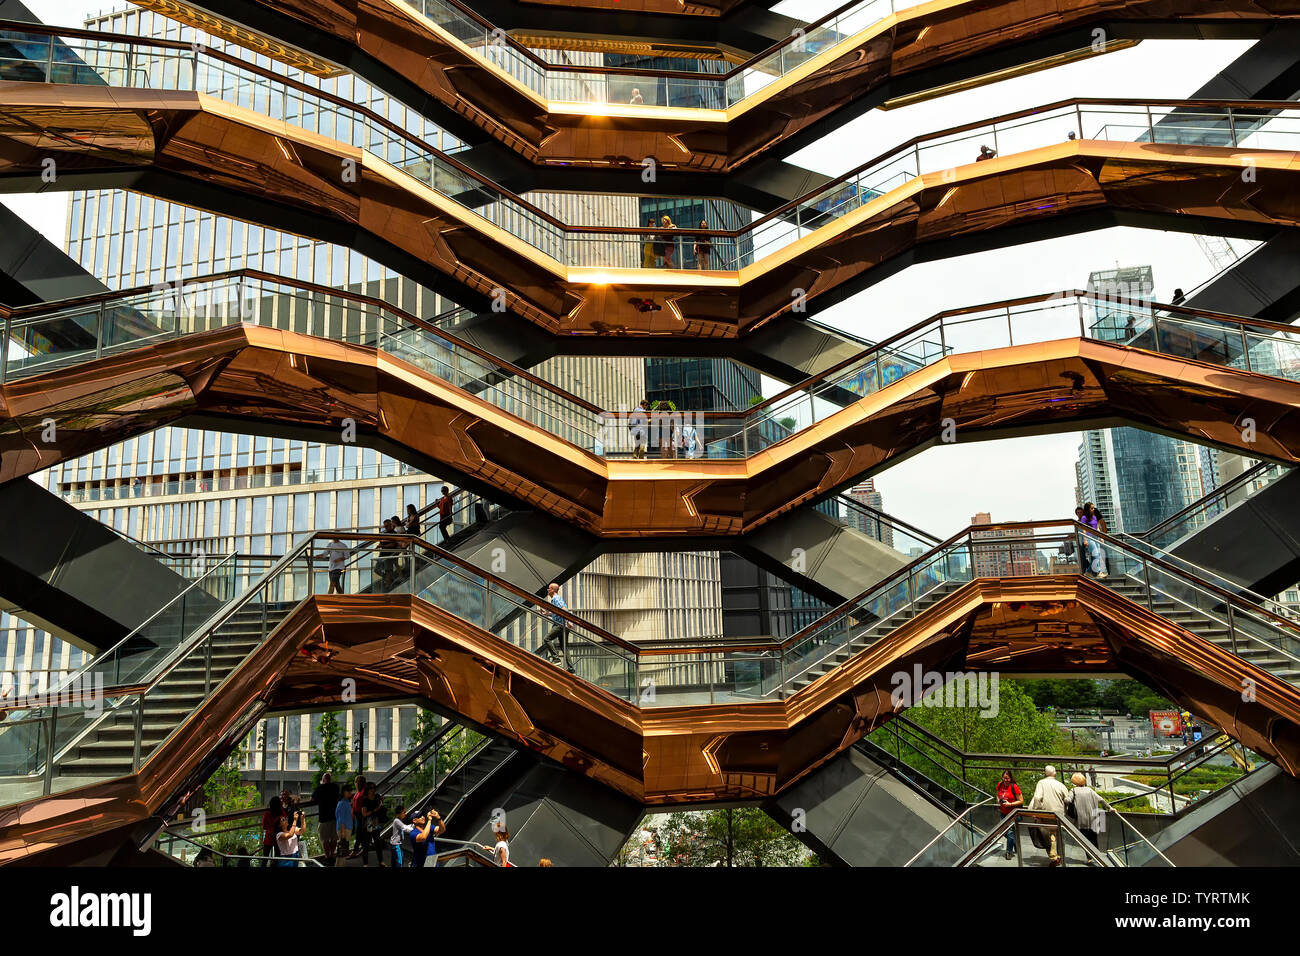 La nave. Cantieri di Hudson, Manhattan. Designer Thomas Heatherwick.New York, NY, Stati Uniti d'America, America. Foto Stock